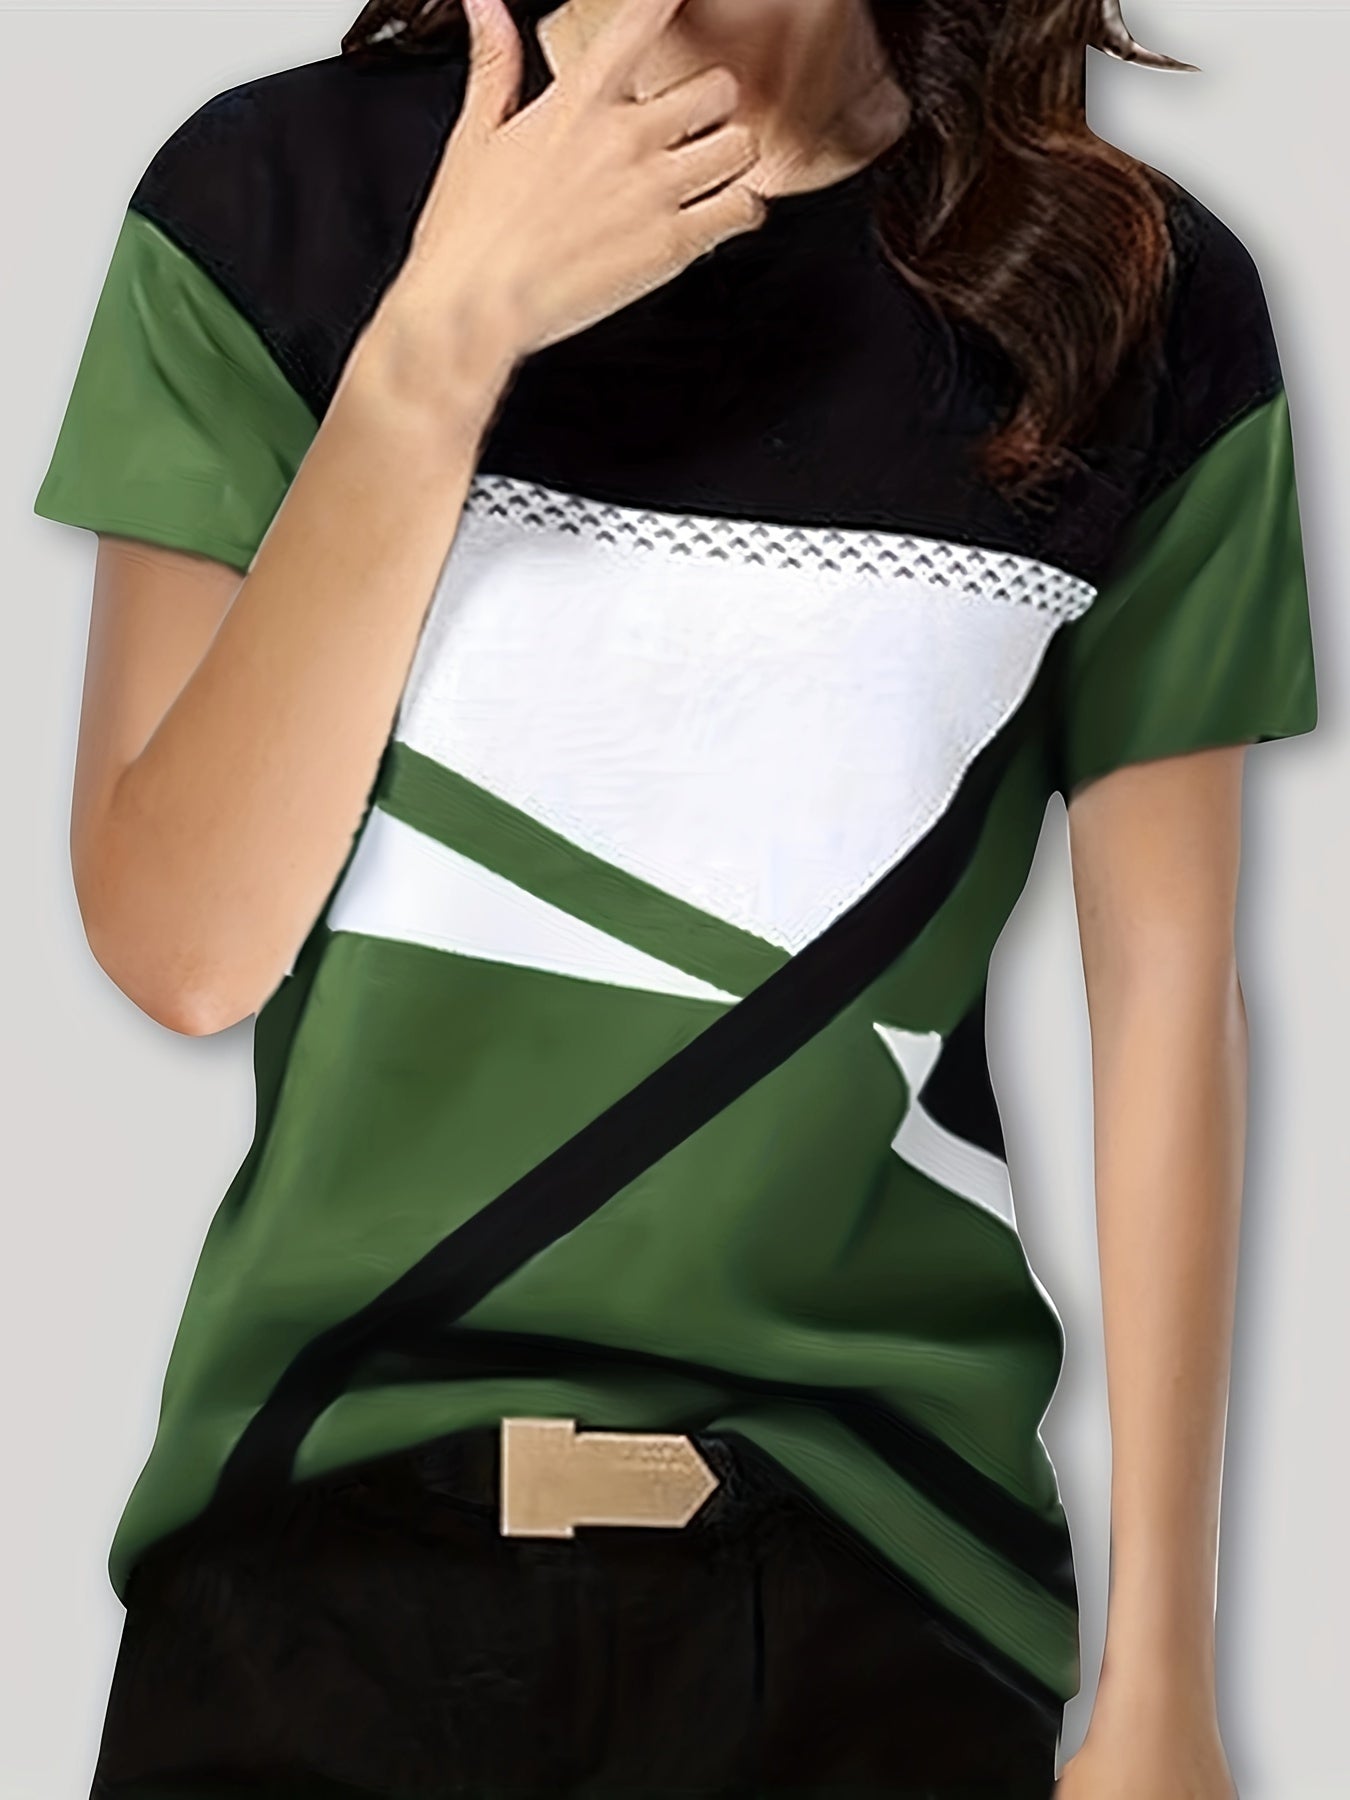 Vzyzv Geo Print Color  Block T-Shirt, Casual Crew Neck Short Sleeve T-Shirt For Spring & Summer, Women's Clothing